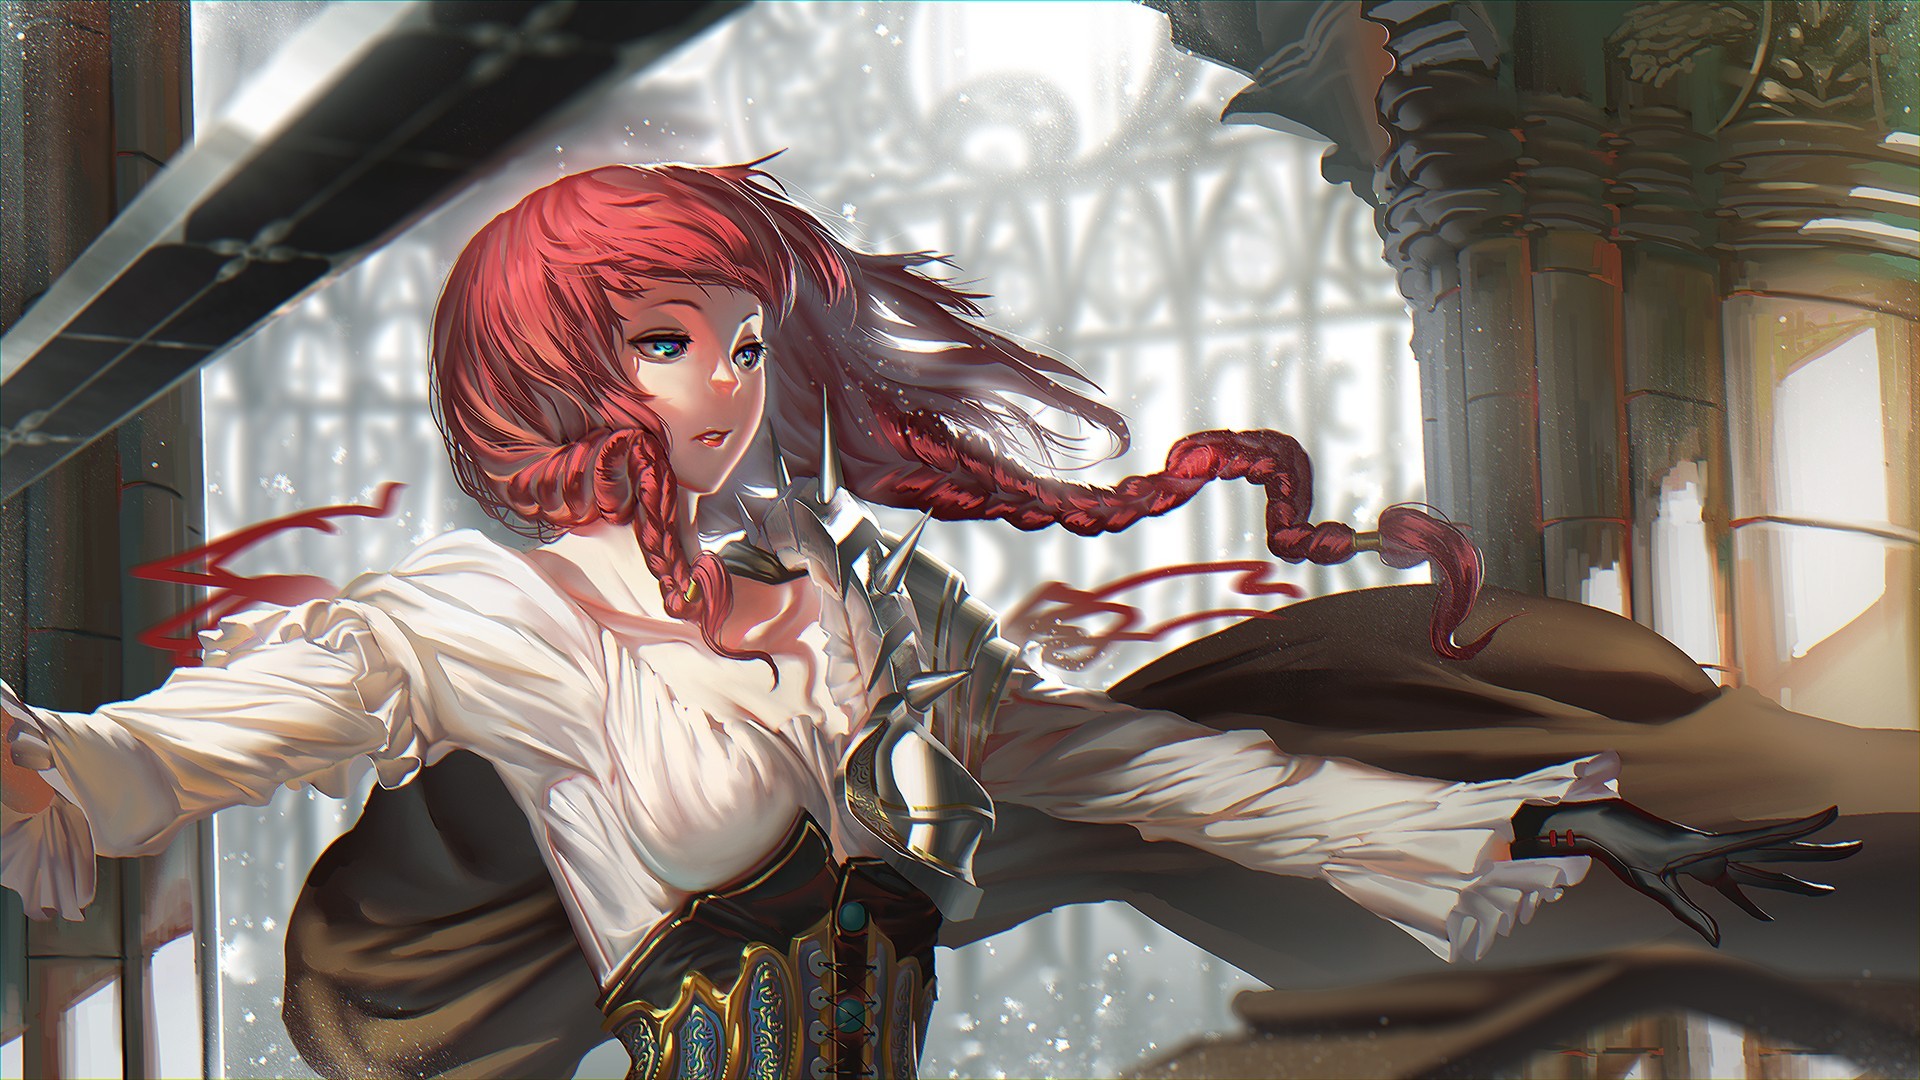 General 1920x1080 sword redhead anime women Pixiv fantasy art fantasy girl long hair women with swords weapon